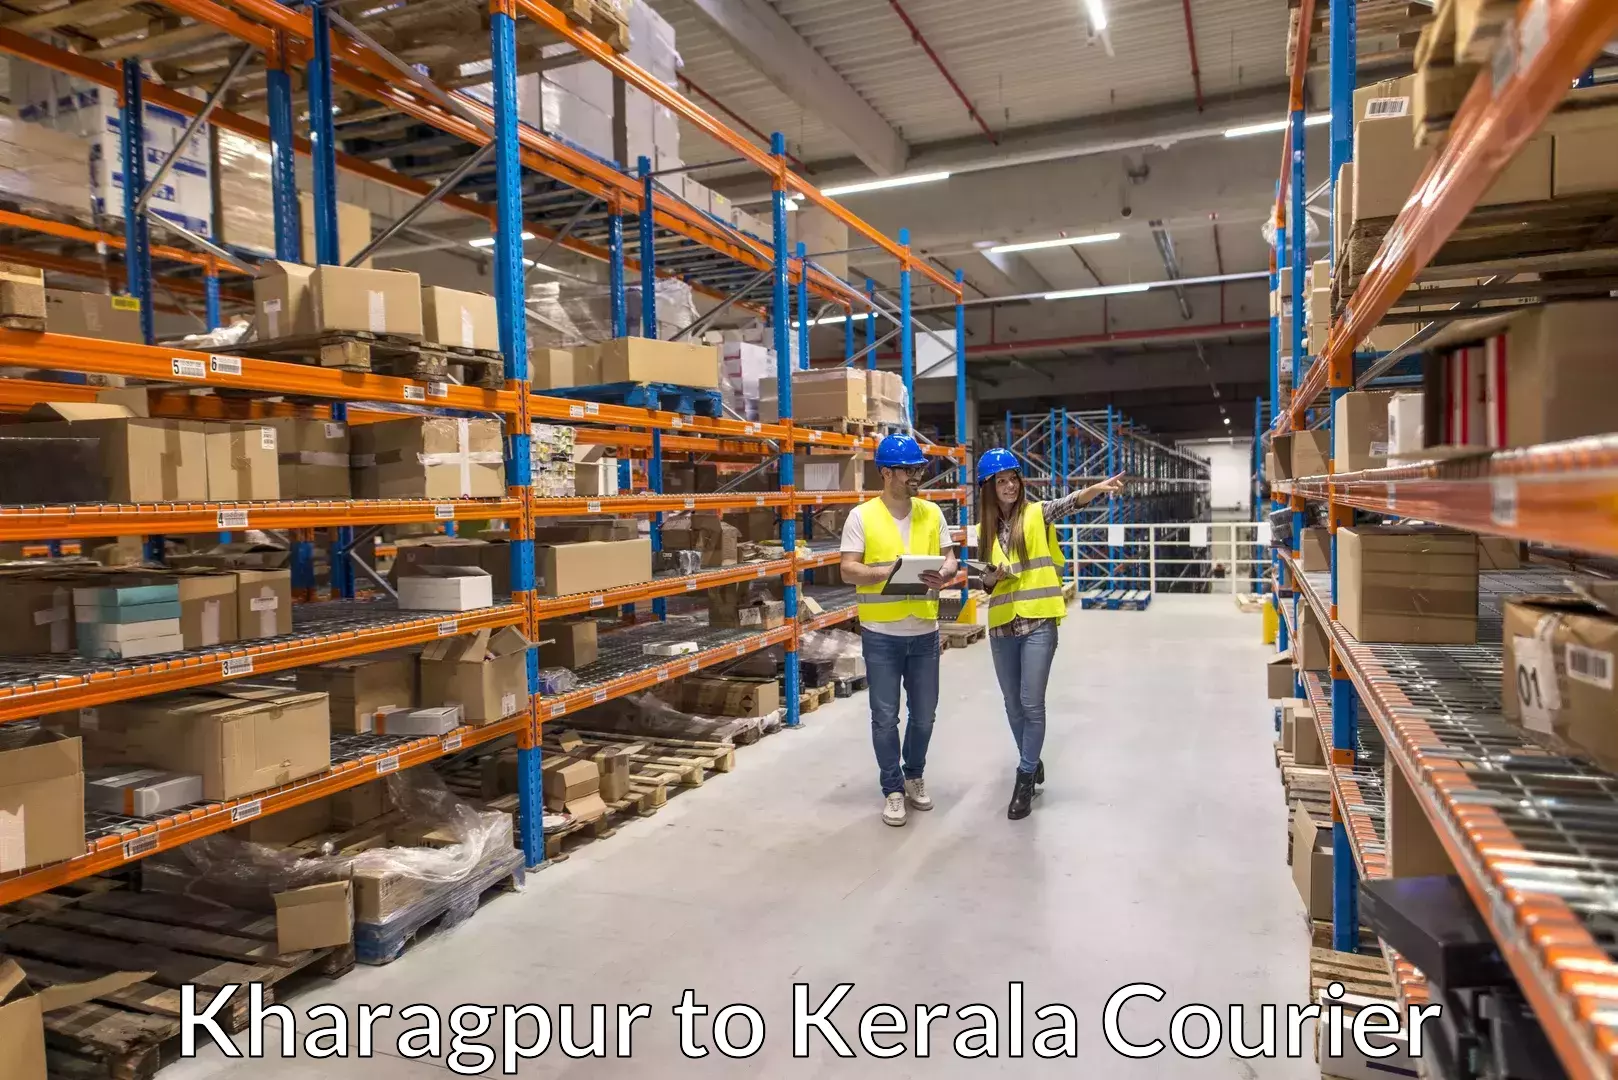 Luggage shipment specialists Kharagpur to Thamarassery